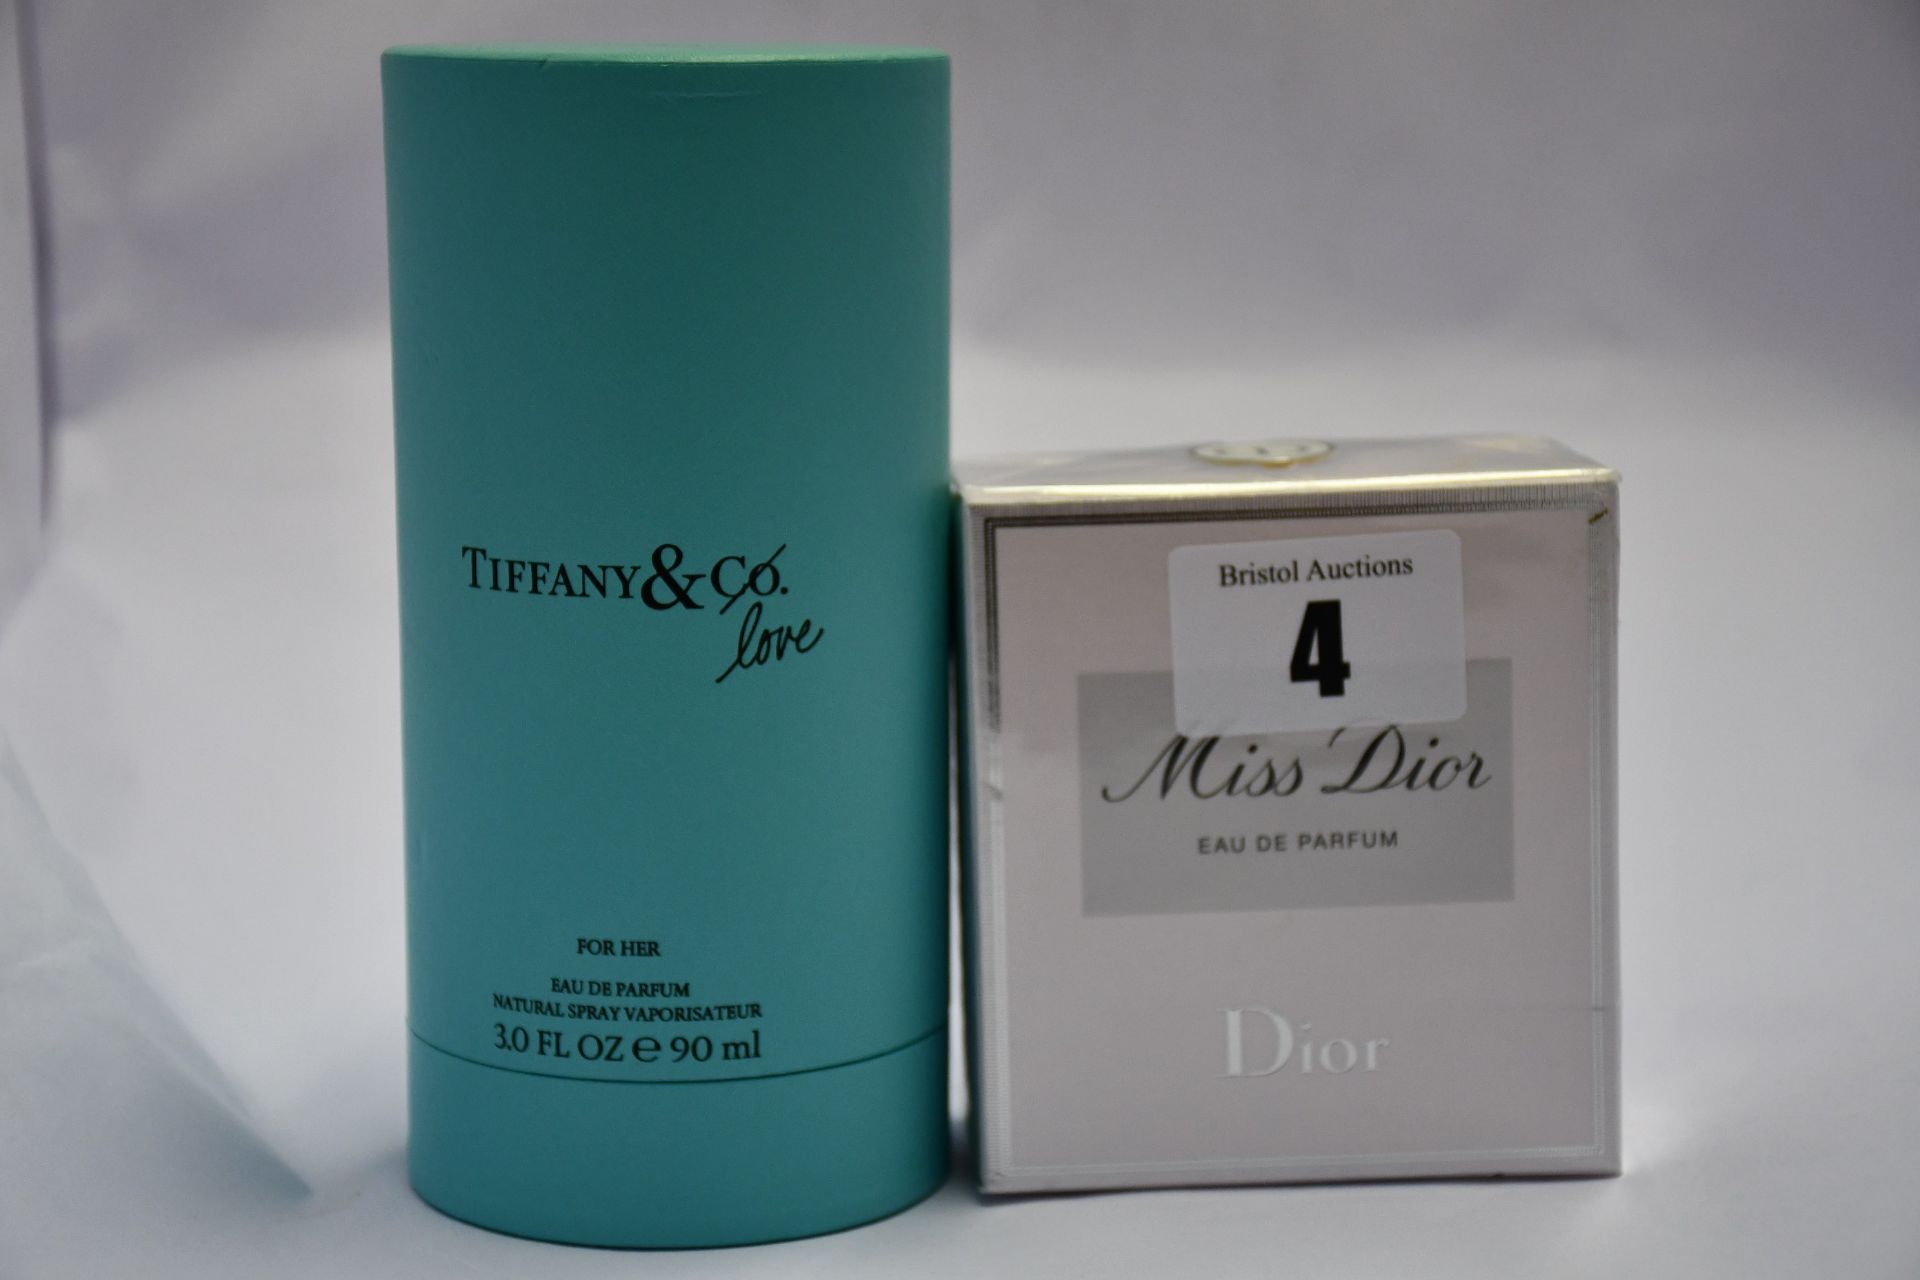 One Tiffany & Co Love for her eau de parfum (90ml) and one Miss Dior eau de parfum (50ml), both